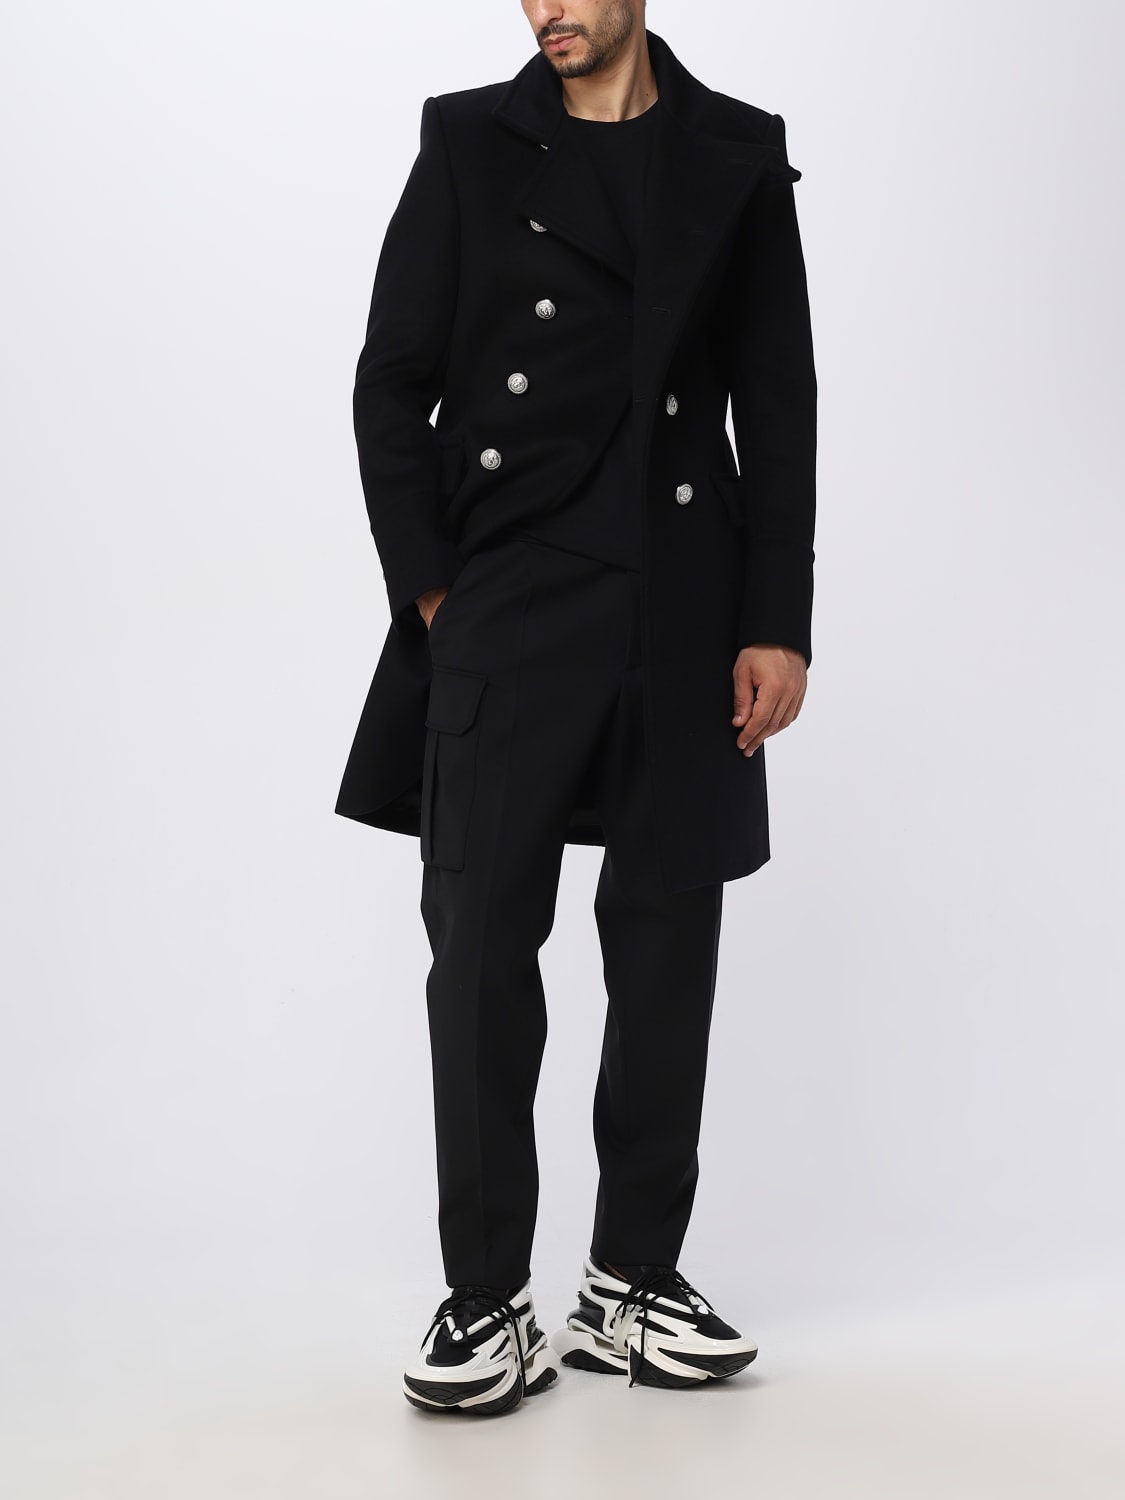 BALMAIN: Double-breasted coat in wool cloth - Black | Balmain coat ...